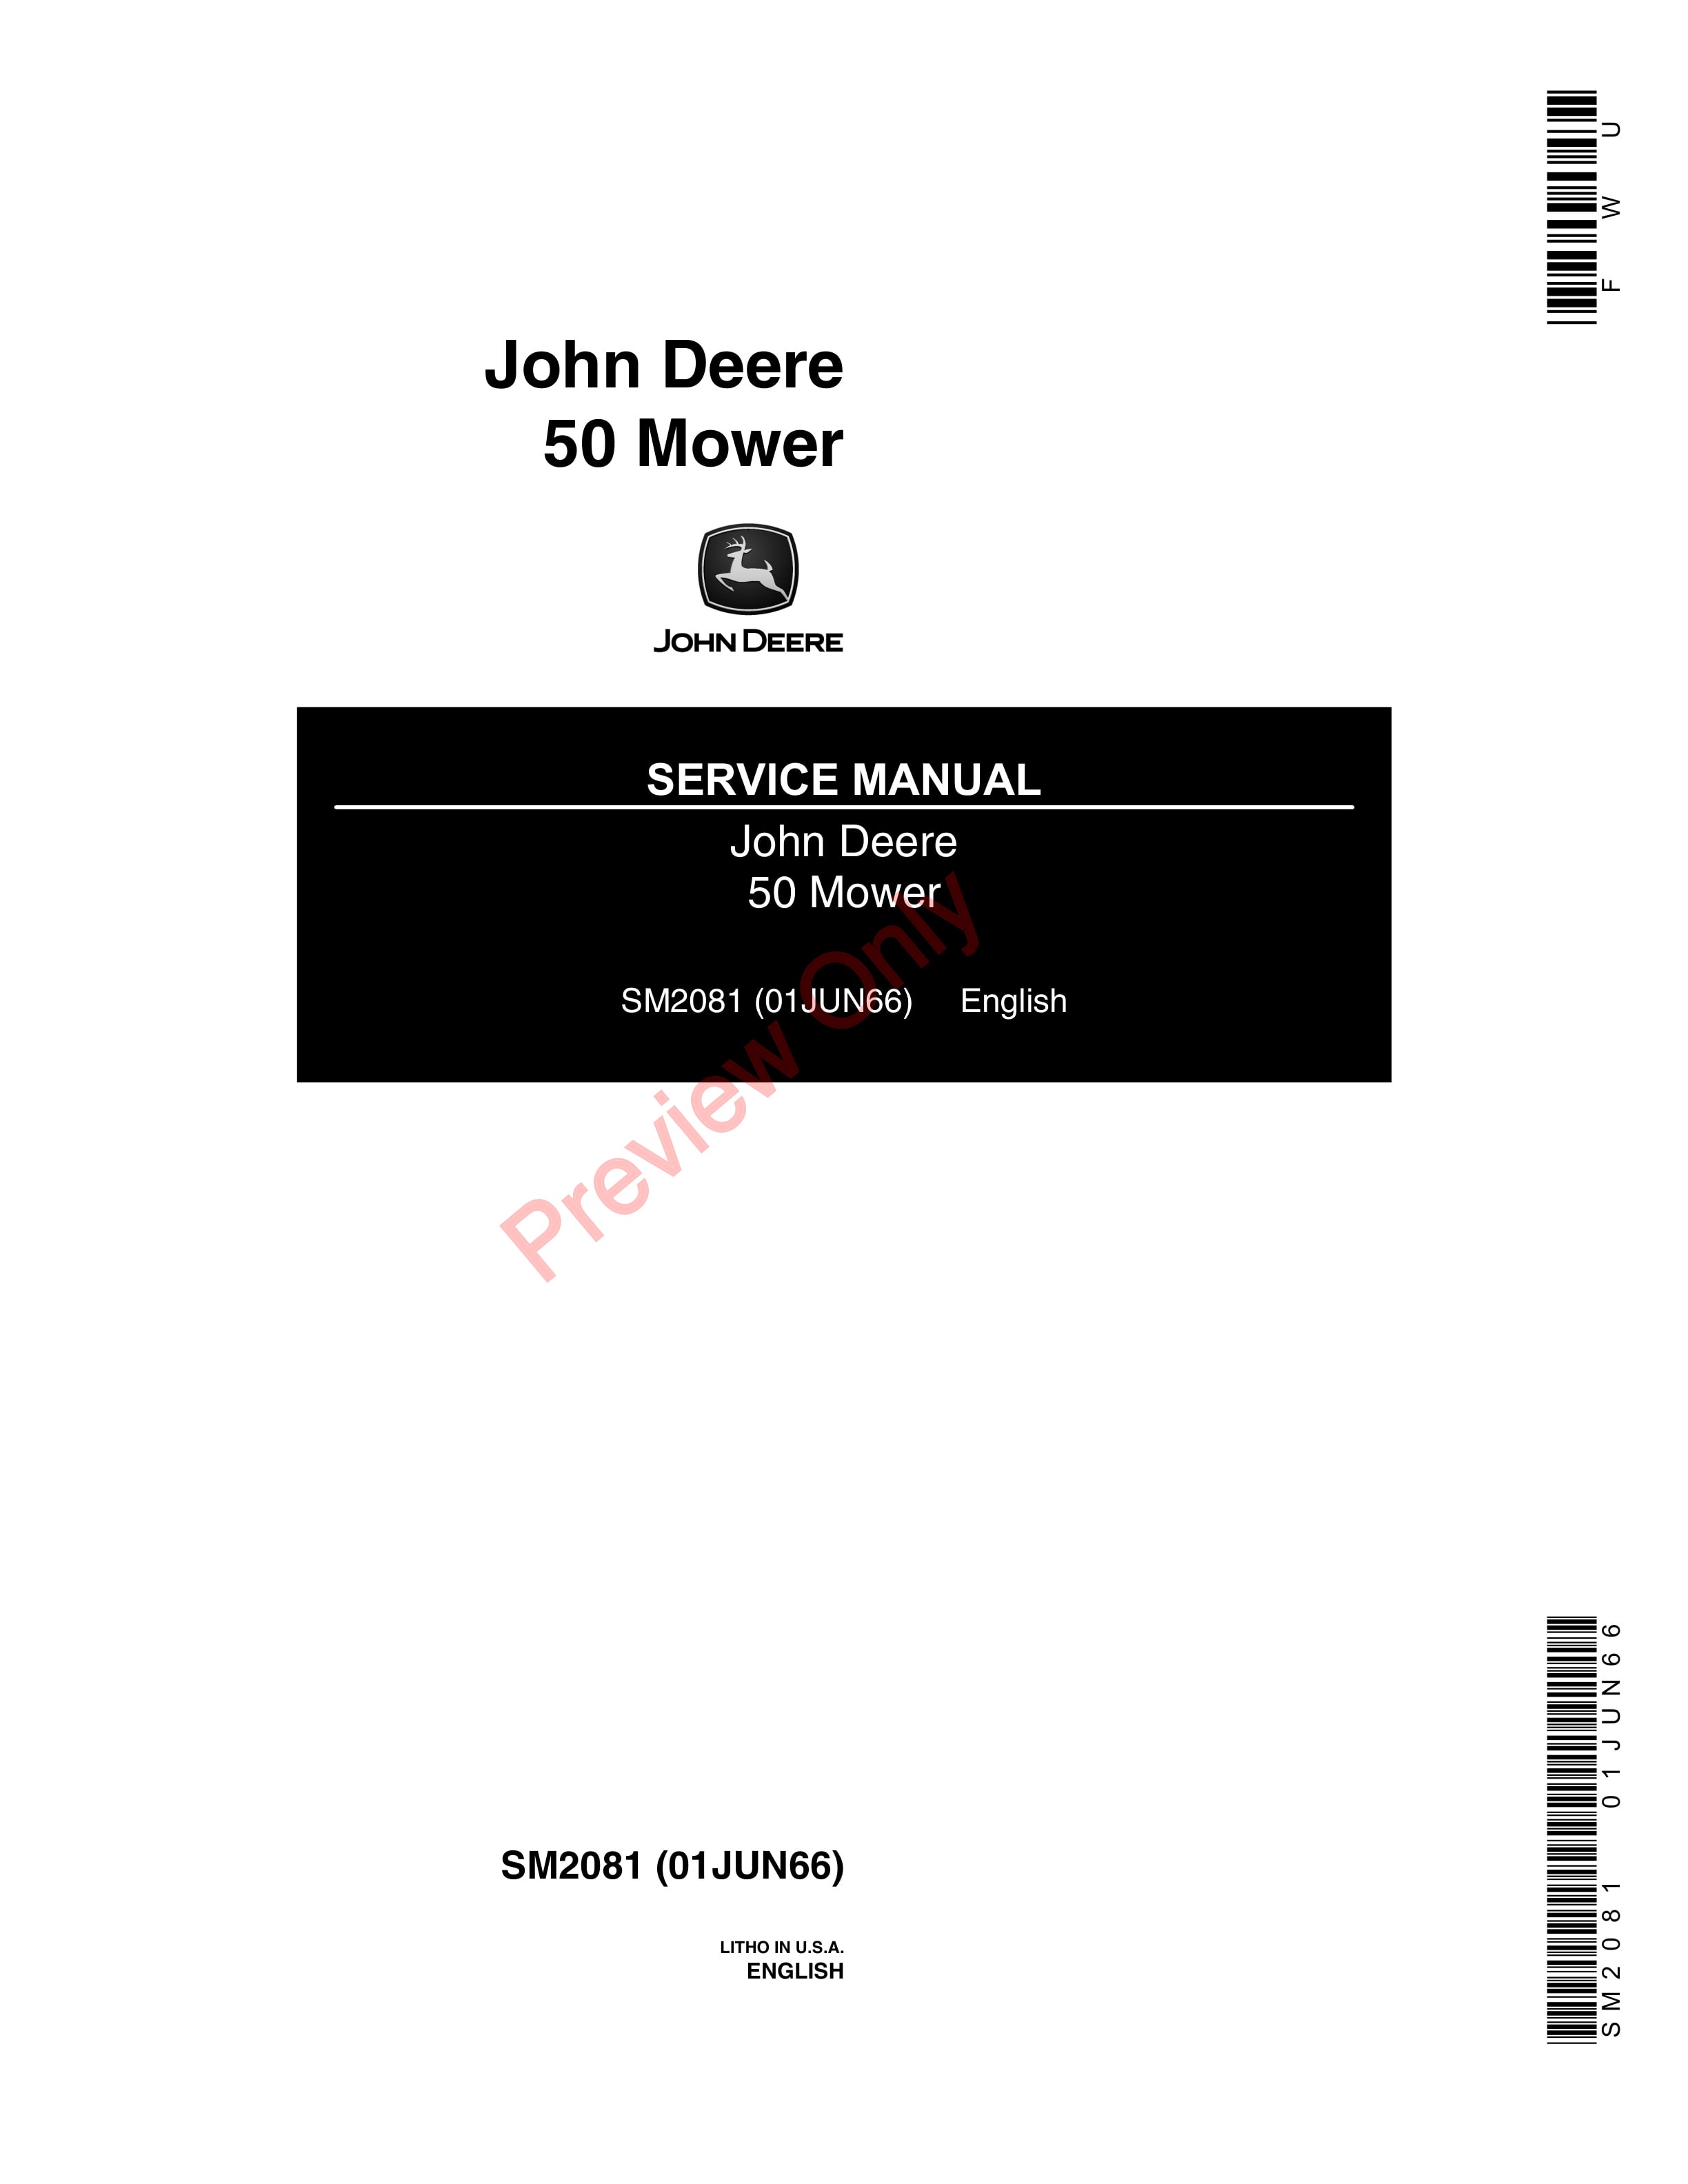 John Deere 50 Mower Service Manual SM2081 01JUN66-1